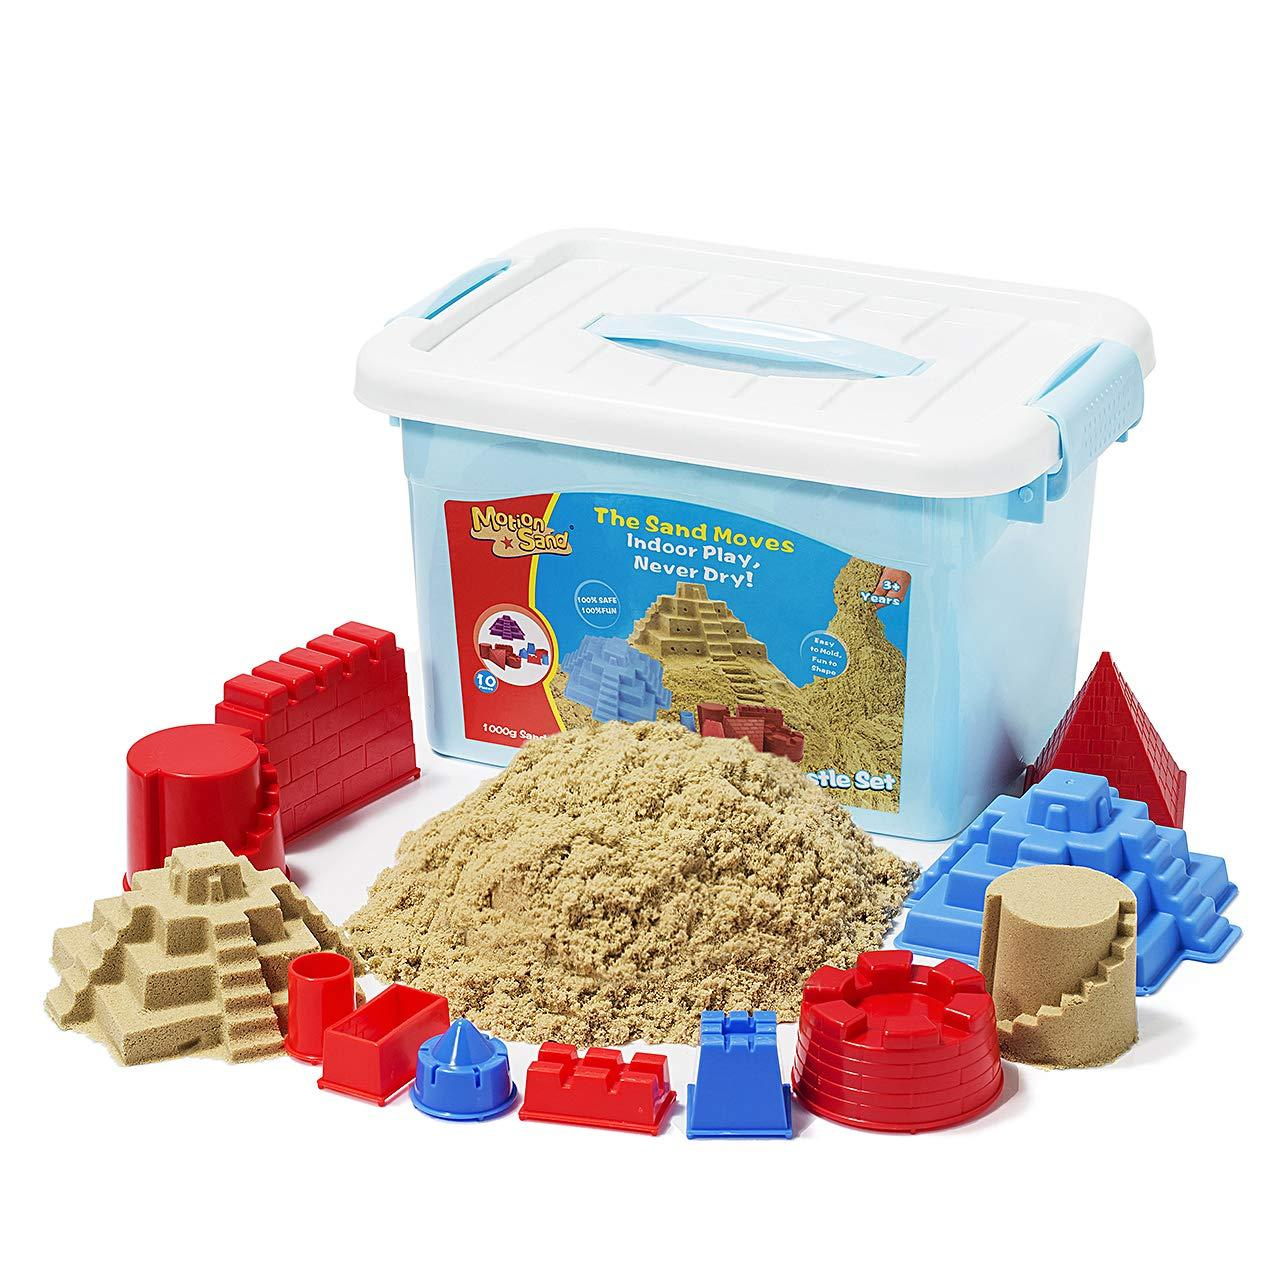 Motion Sand ทรายมหัศจรรย์ ชุดปราสาท (Bucket Set) ทราย 1kg พร้อมของเล่นทราย และกล่องหิ้ว